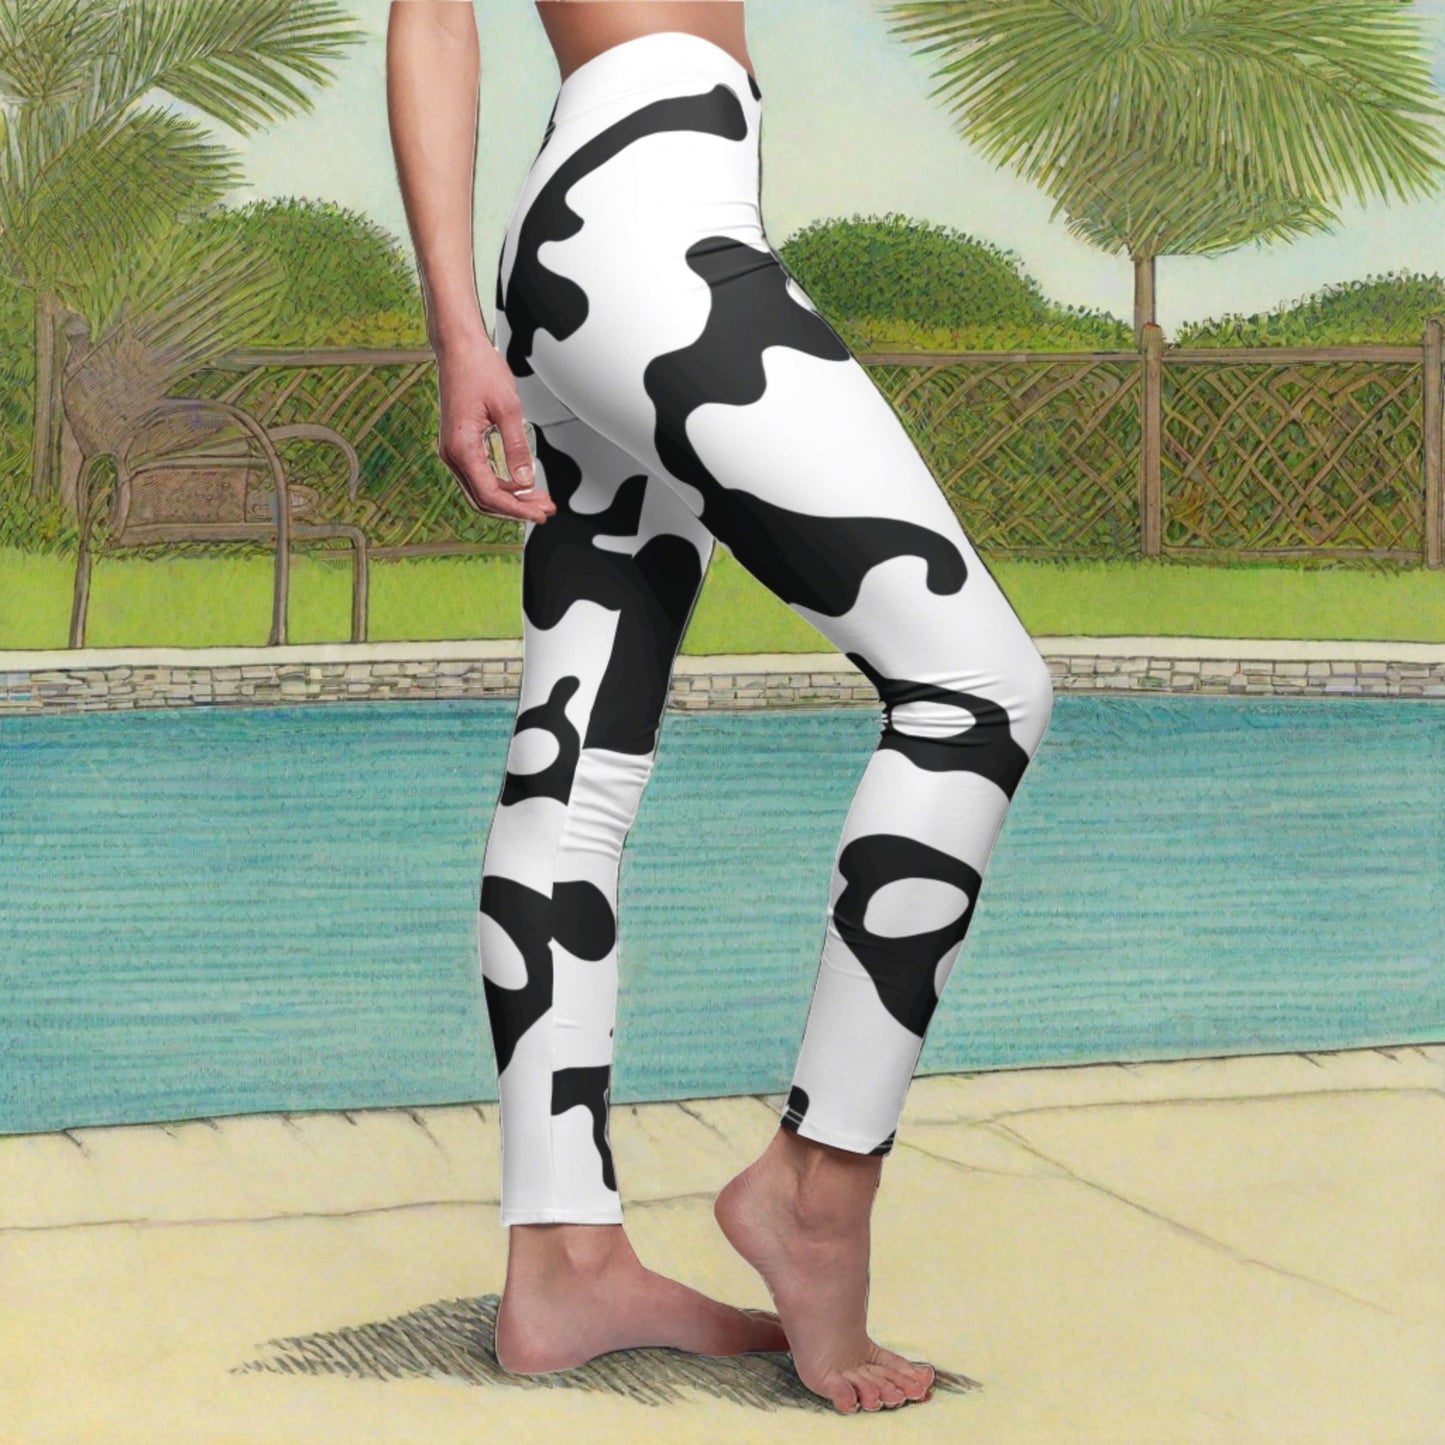 Women's Cut & Sew Casual Leggings | Camouflage Black & White Design